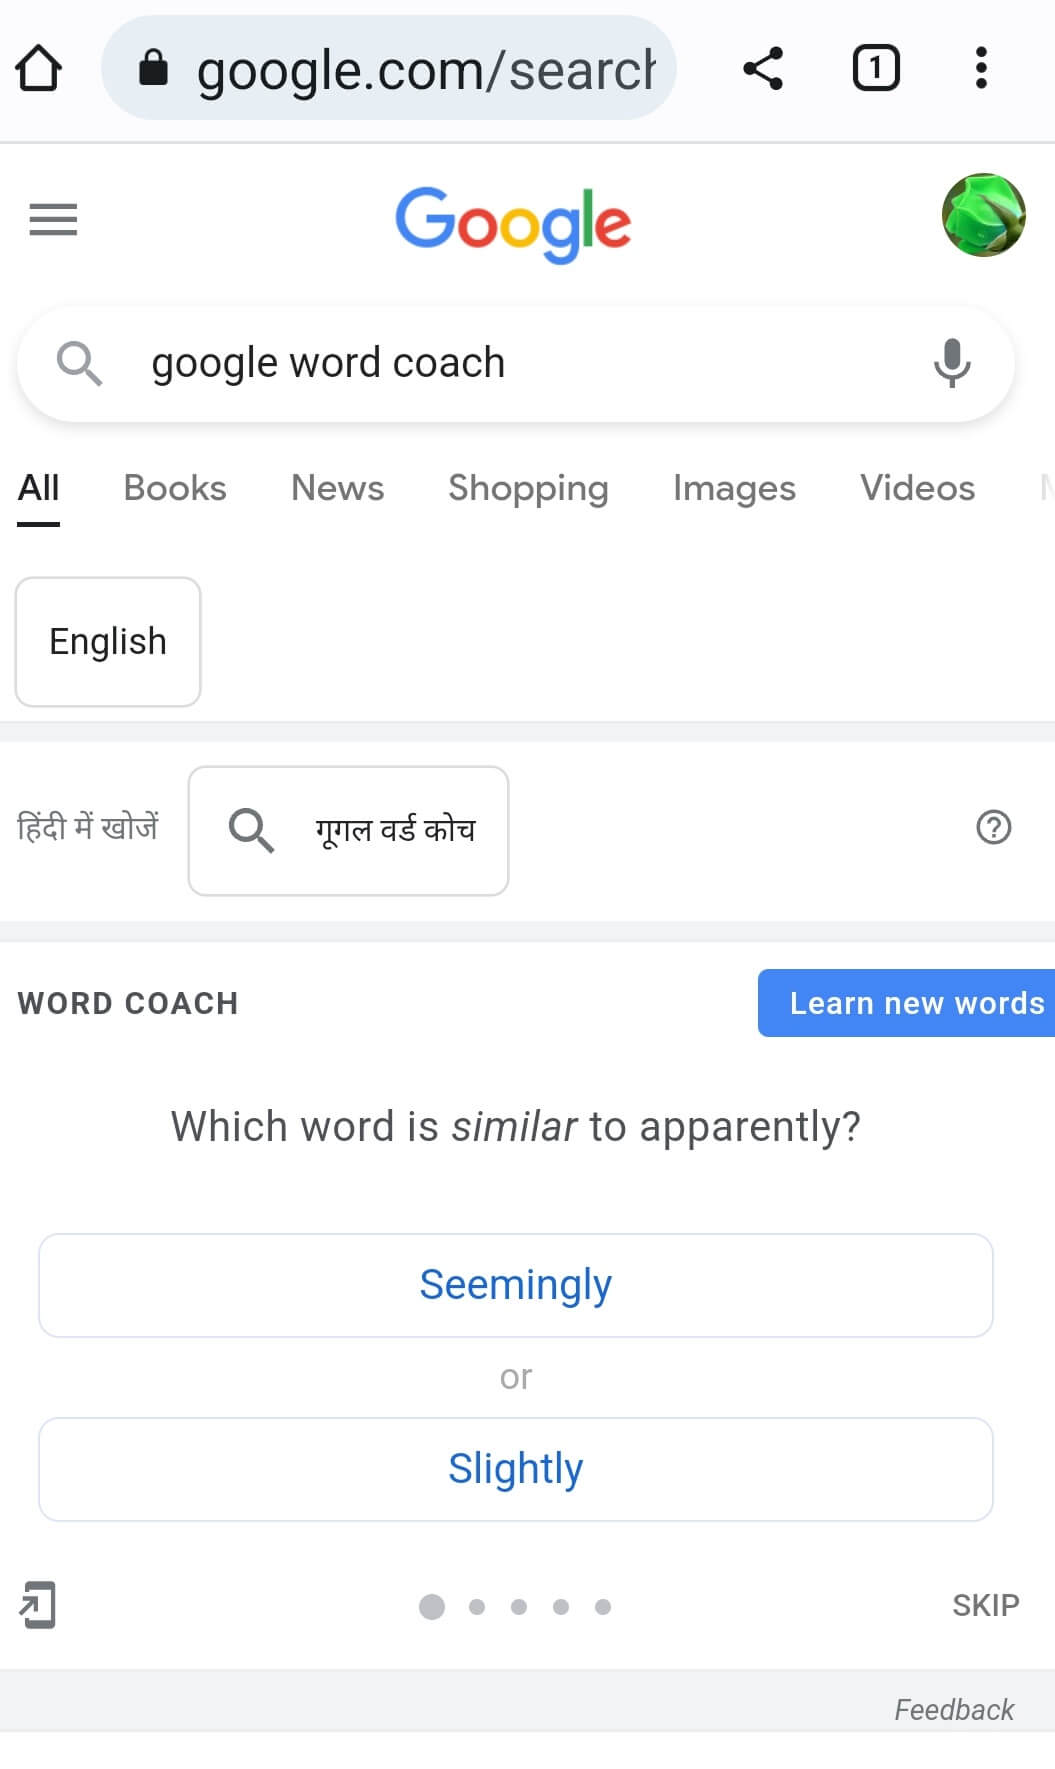 Google Word Coach Quiz